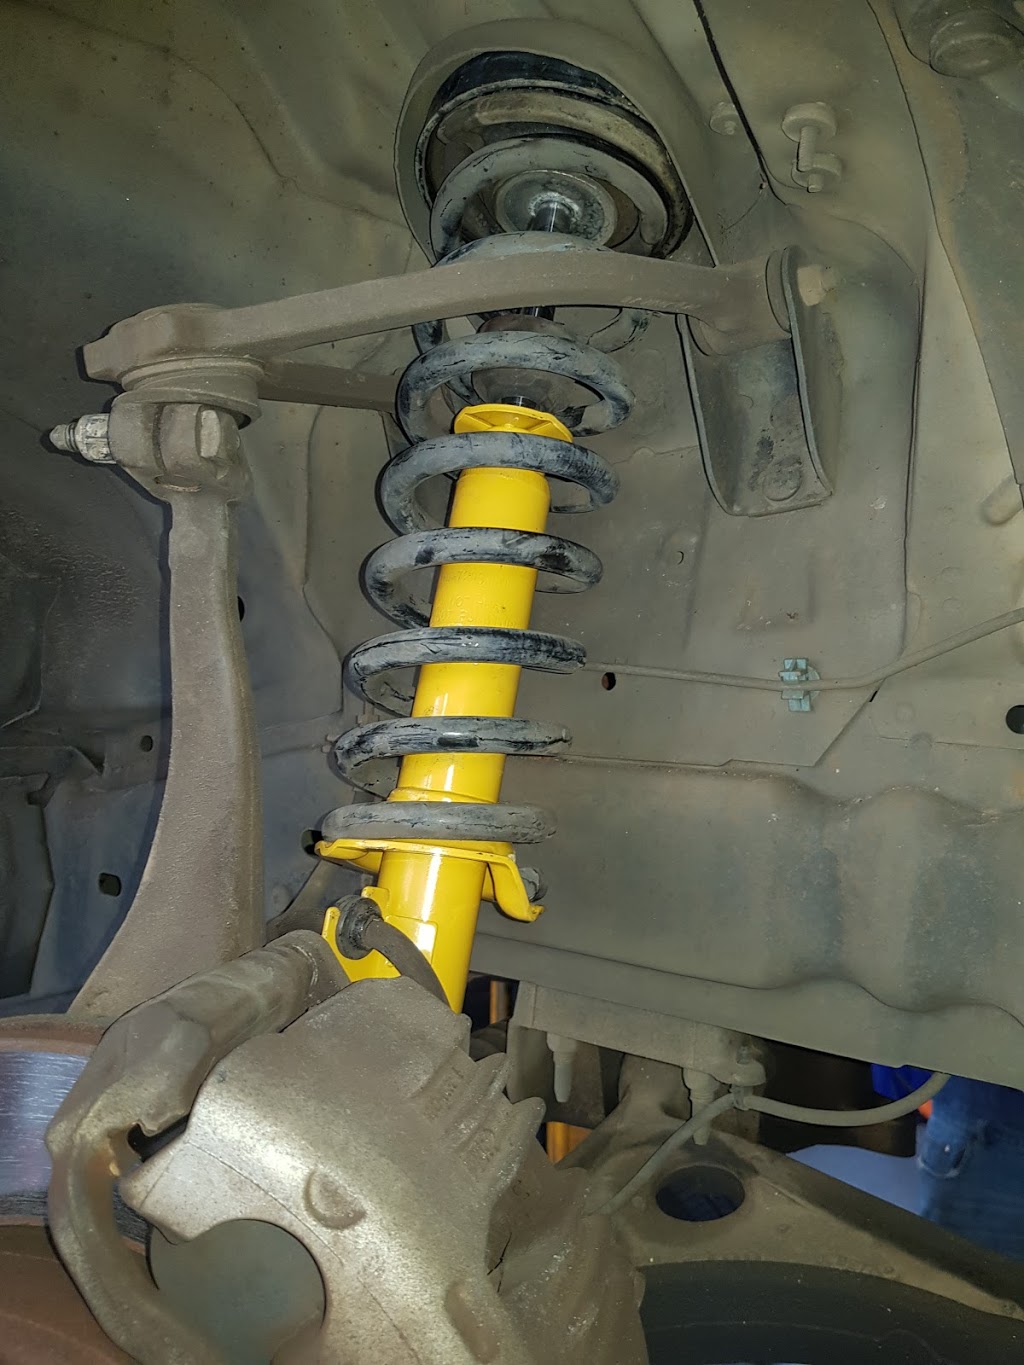 Travs Automotive | car repair | 8B Holland Dr, Melton VIC 3337, Australia | 0397473330 OR +61 3 9747 3330